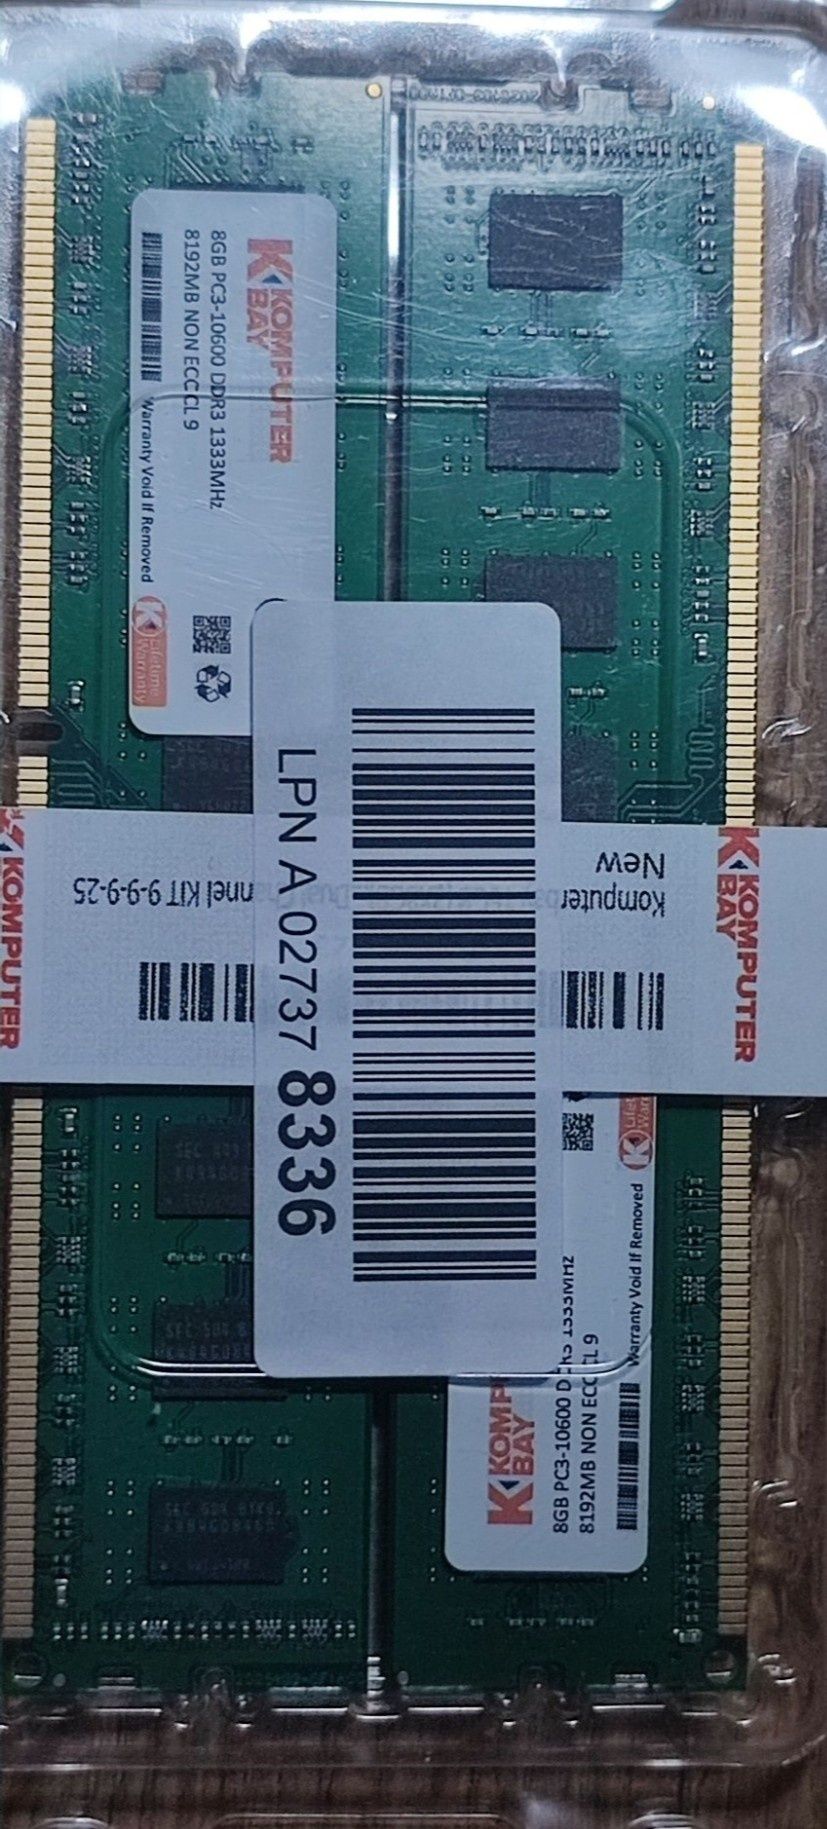 KomputerBay 2x8GB DDR3 1333 MHz non ecc cl9